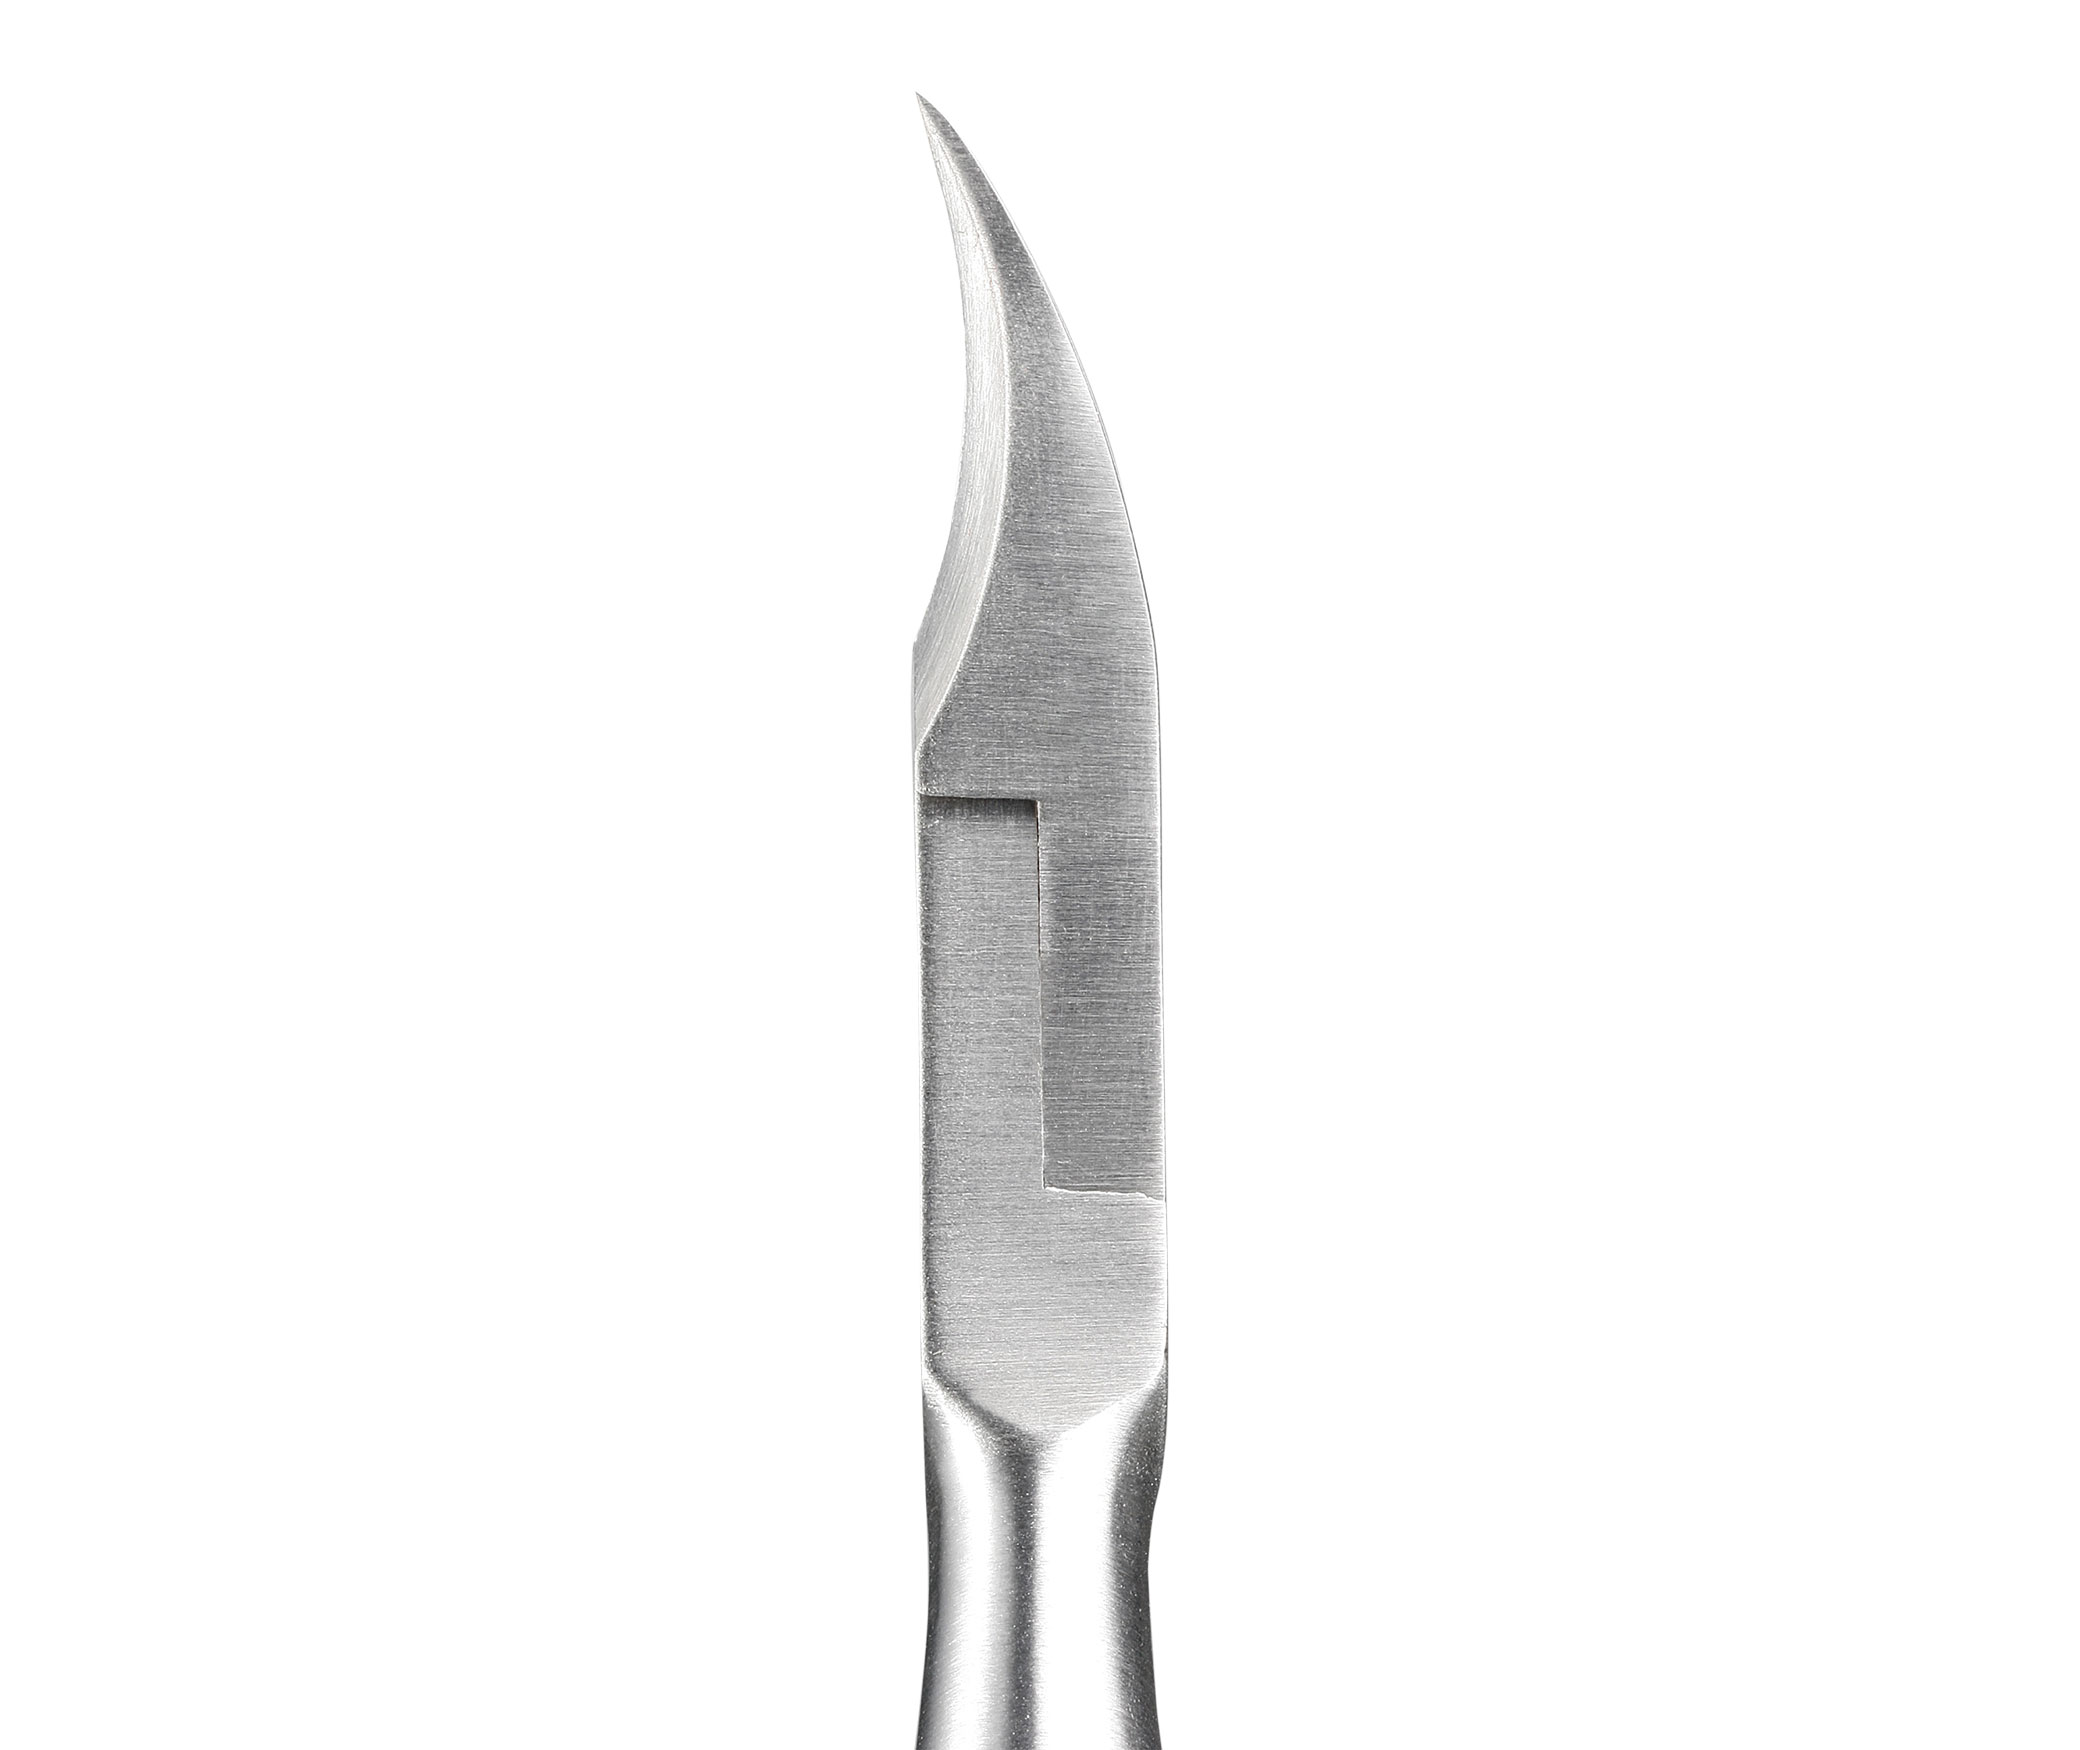 Seki Edge Professional Nail Nipper (SS-202) curved blades